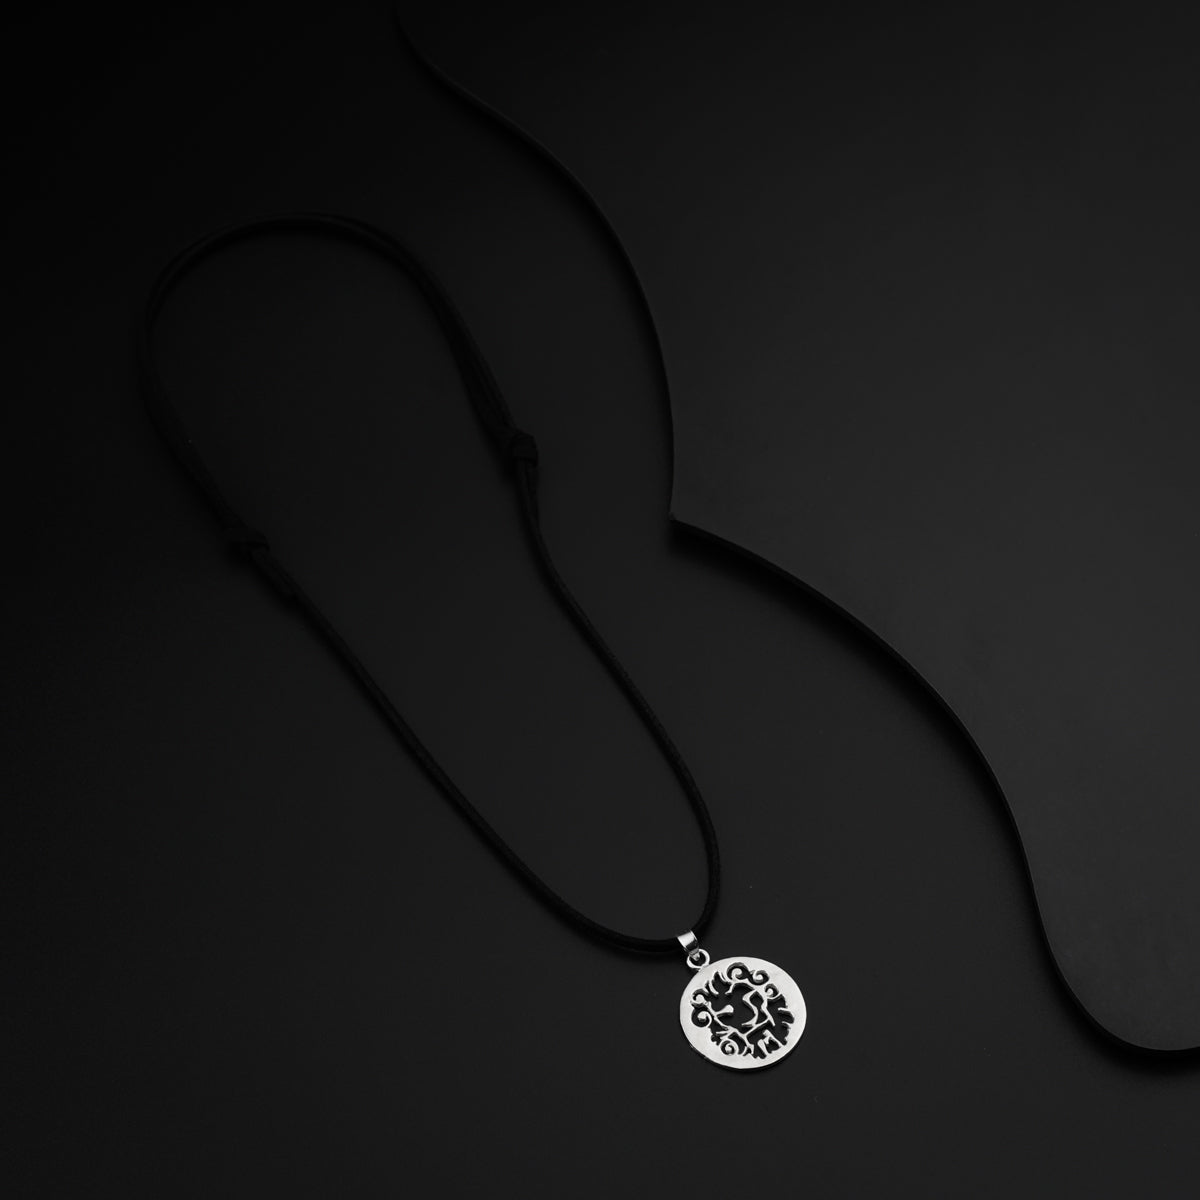 Leo / सिंह Silver Pendant Necklace